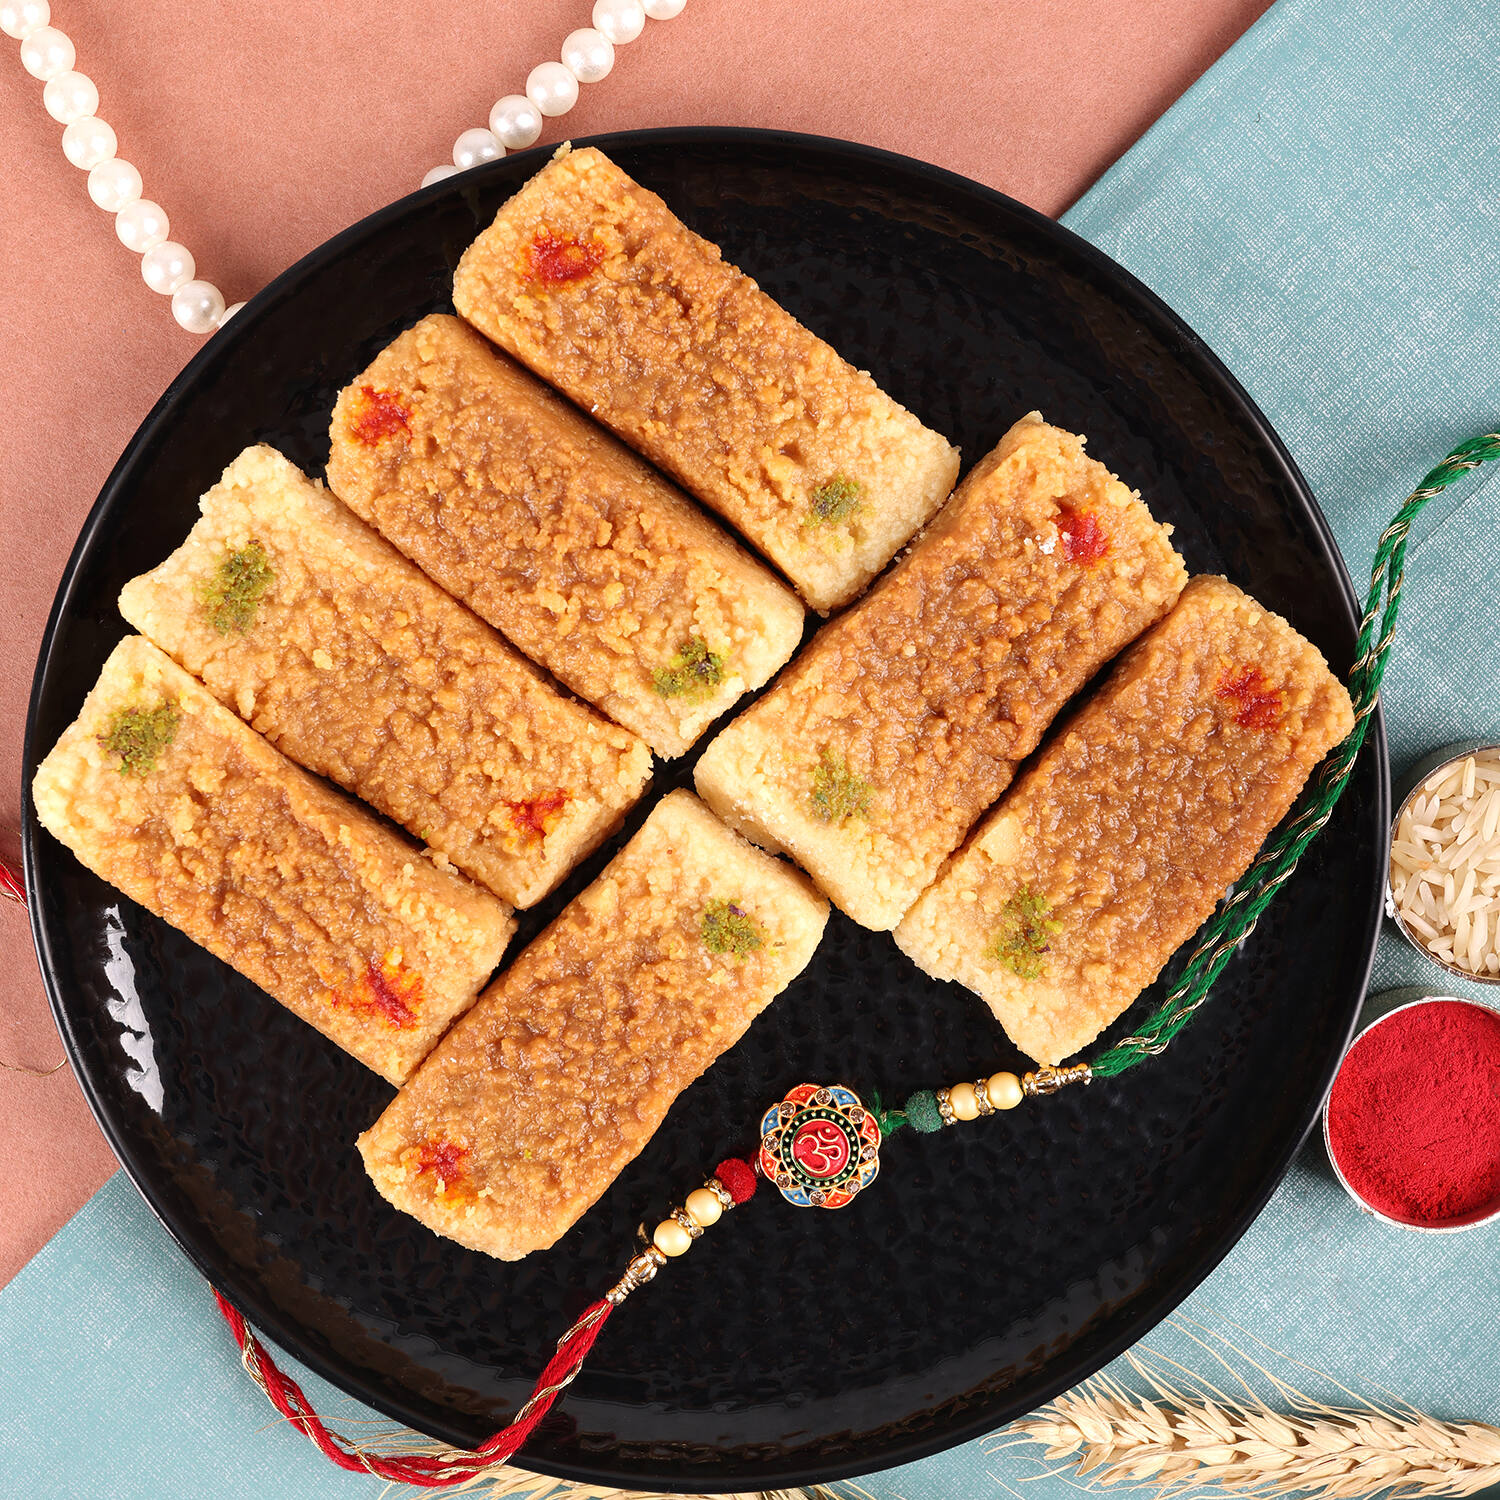 Sandwich dhokla - Picture of Om Sweets & Snacks, Faridabad - Tripadvisor